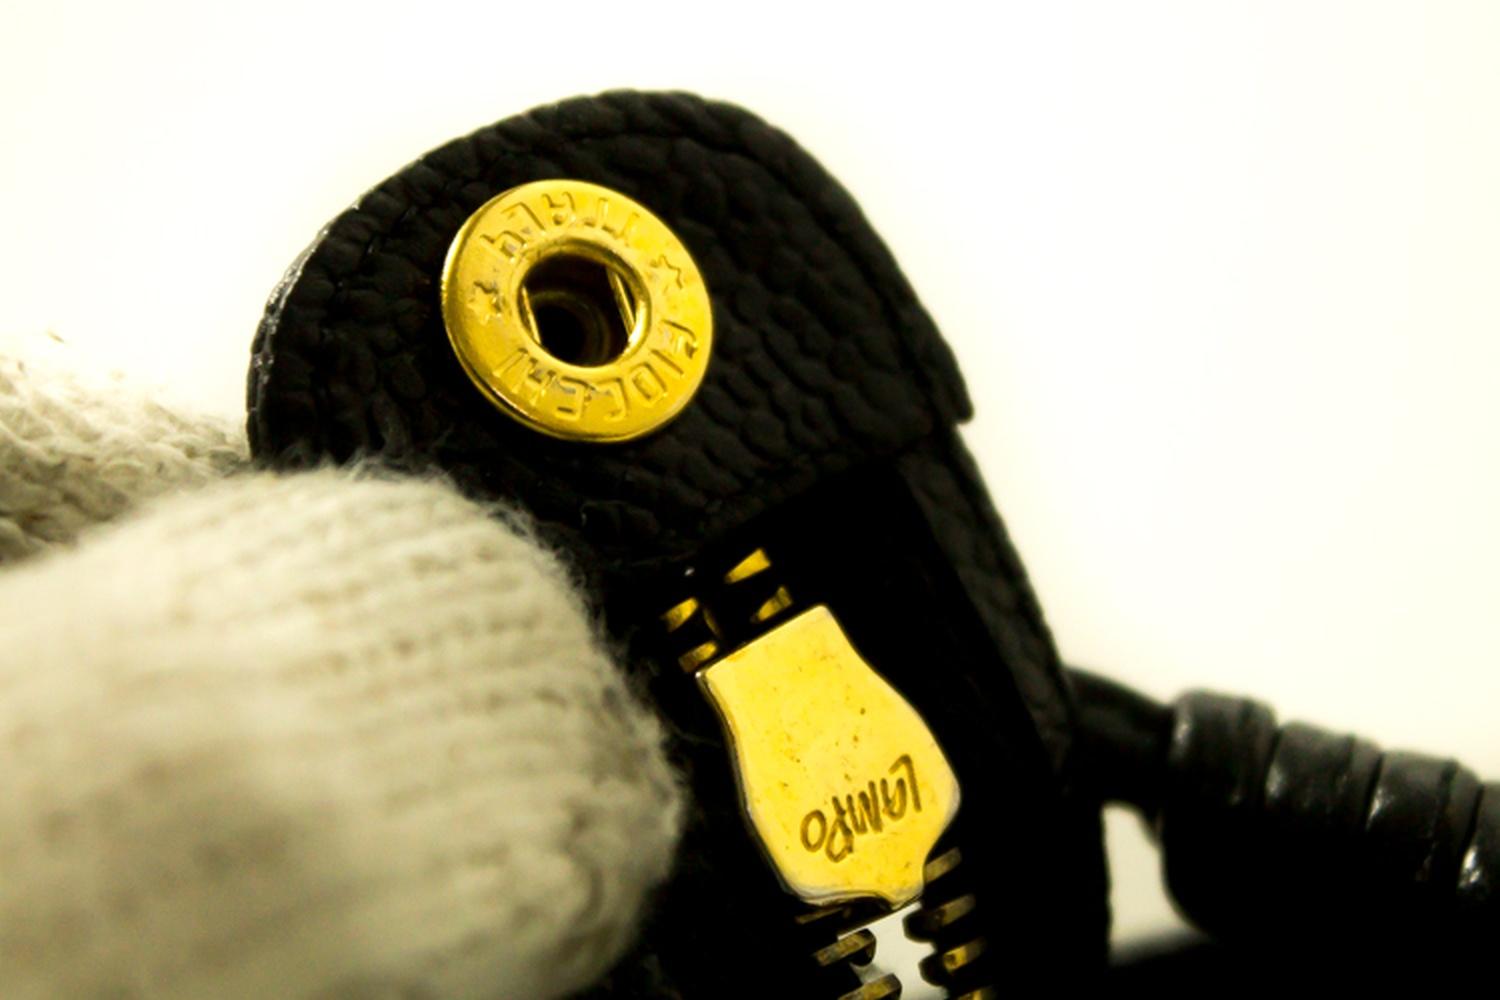 CHANEL Caviar Large Chain Shoulder Bag Black Leather Gold Zipper 13